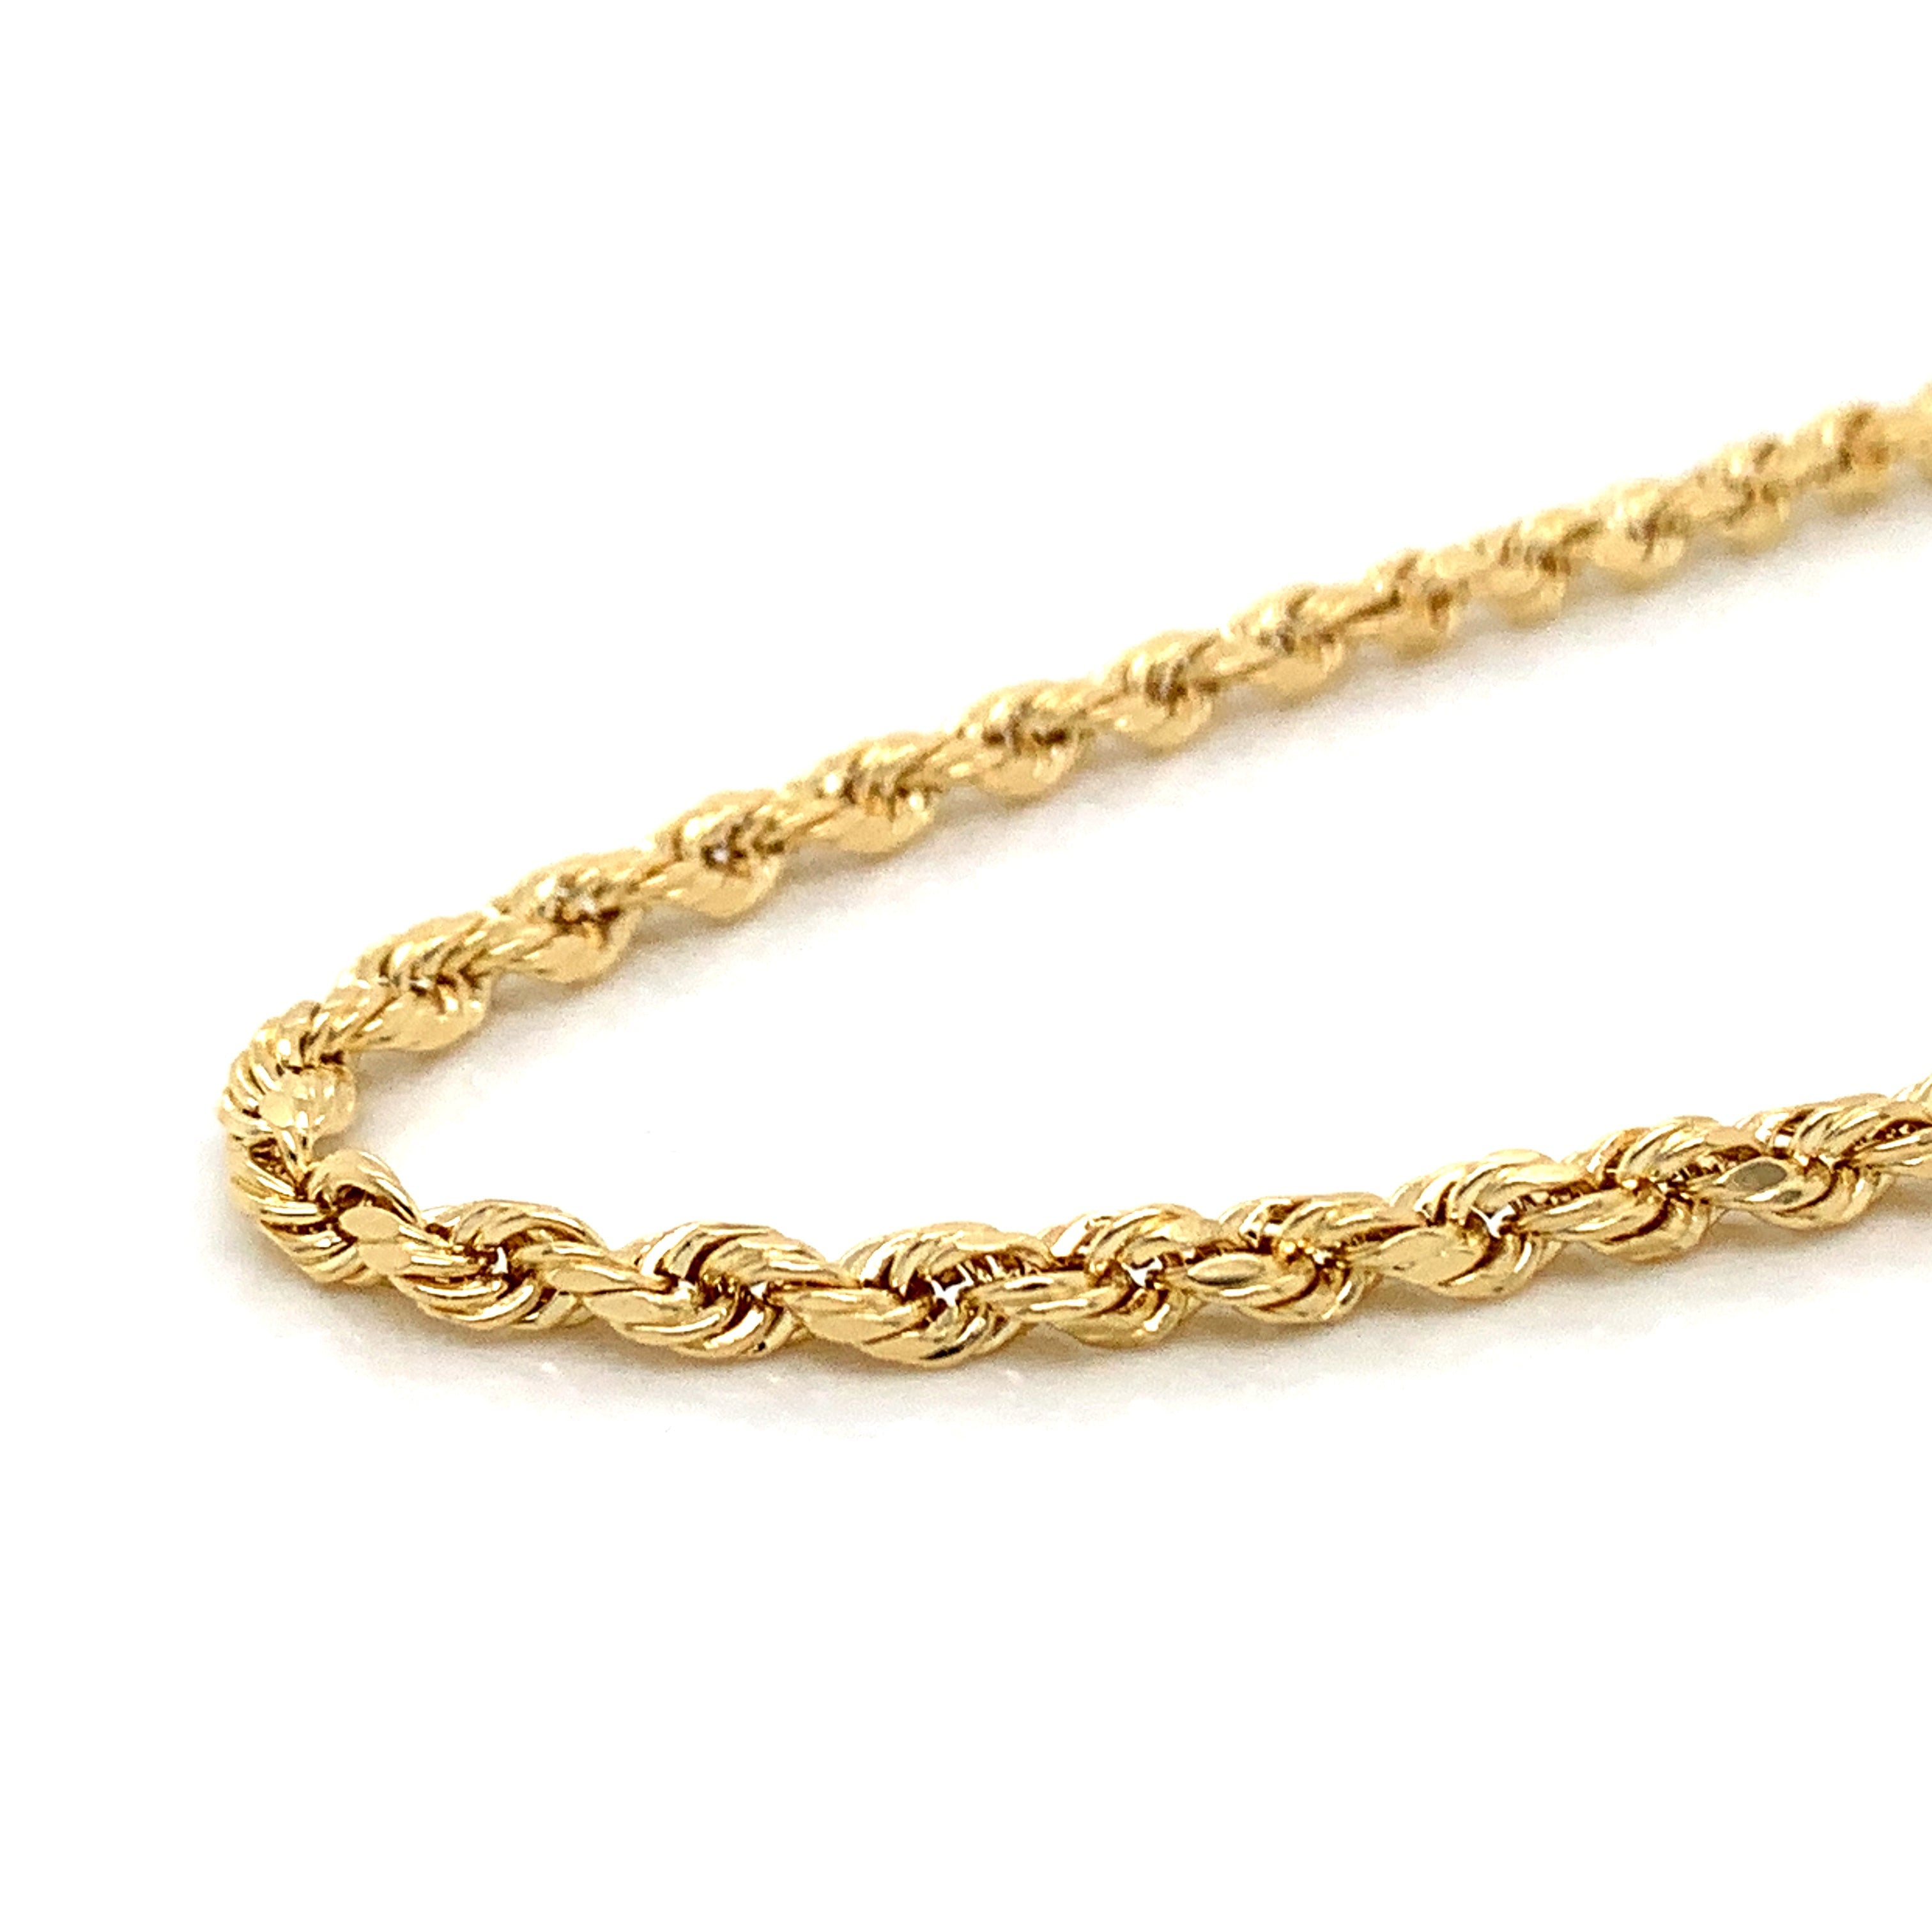 Gold Rope Chain 14K (Regular) - 4mm